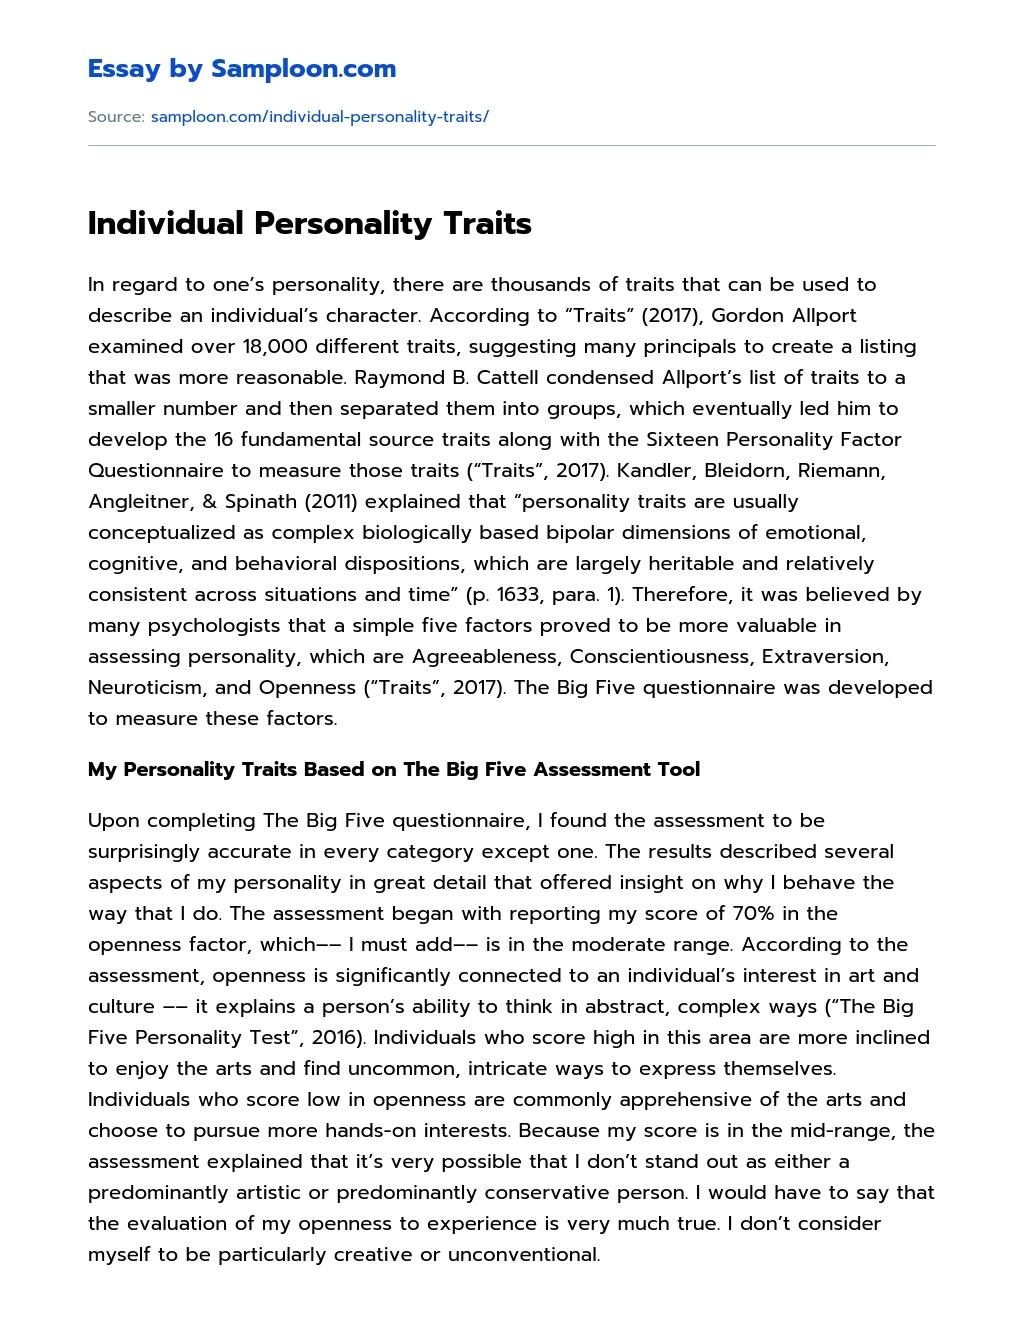 Individual Personality Traits essay